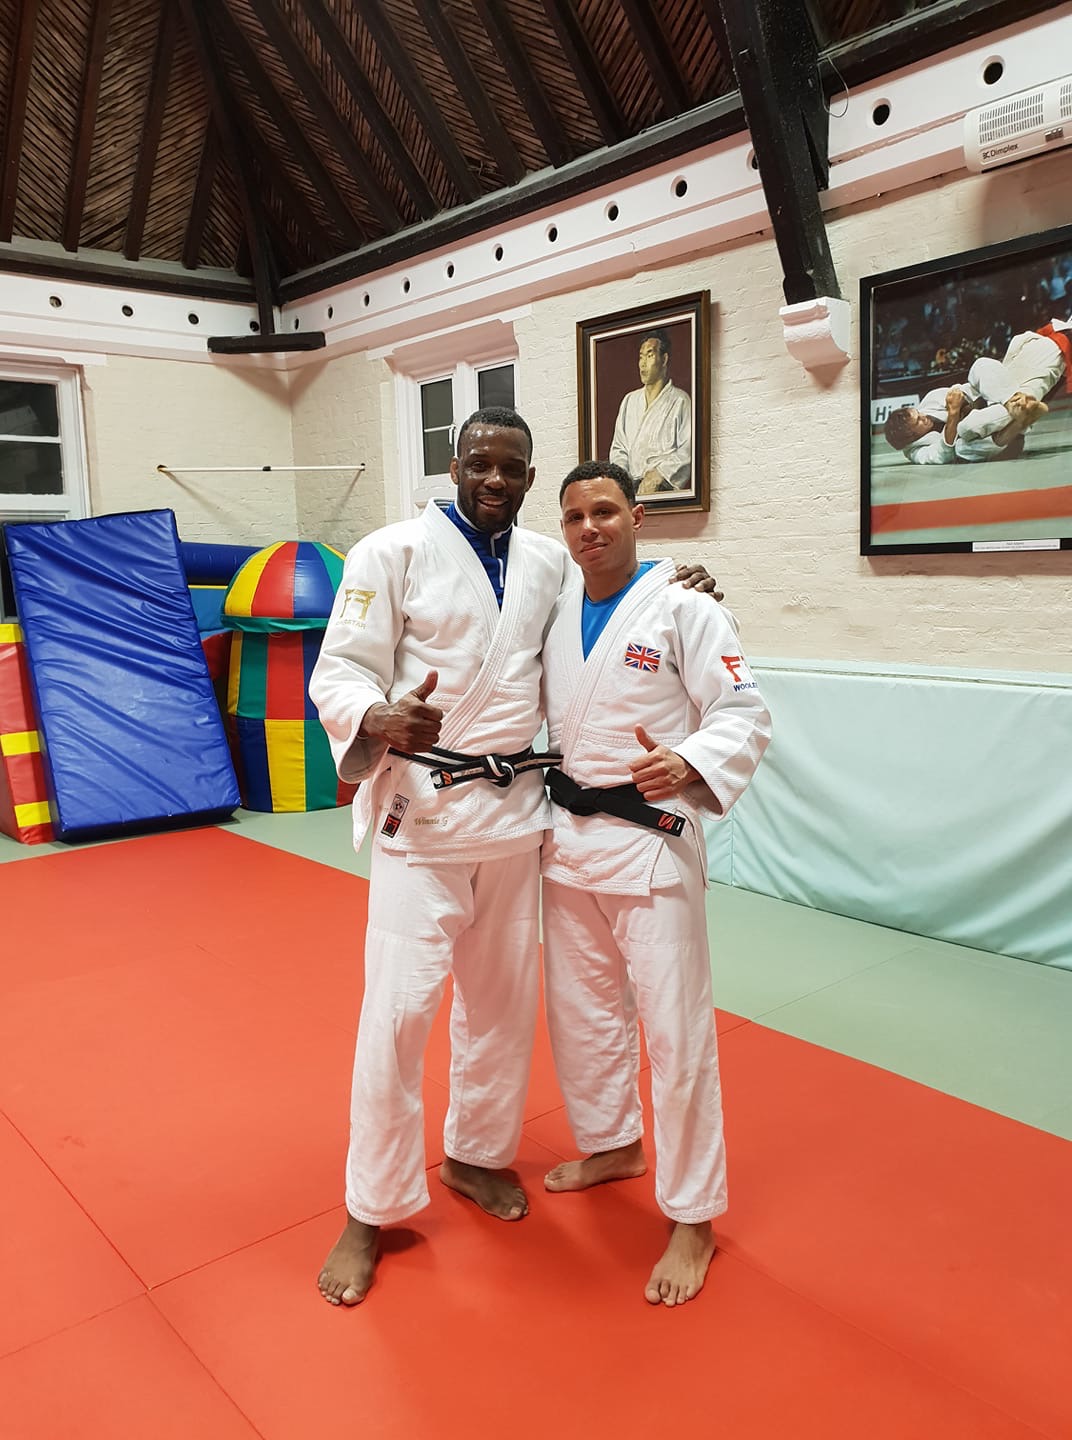 Jason with Winston Gordon, British Judoka and three-time Olympian at the Budokwai.